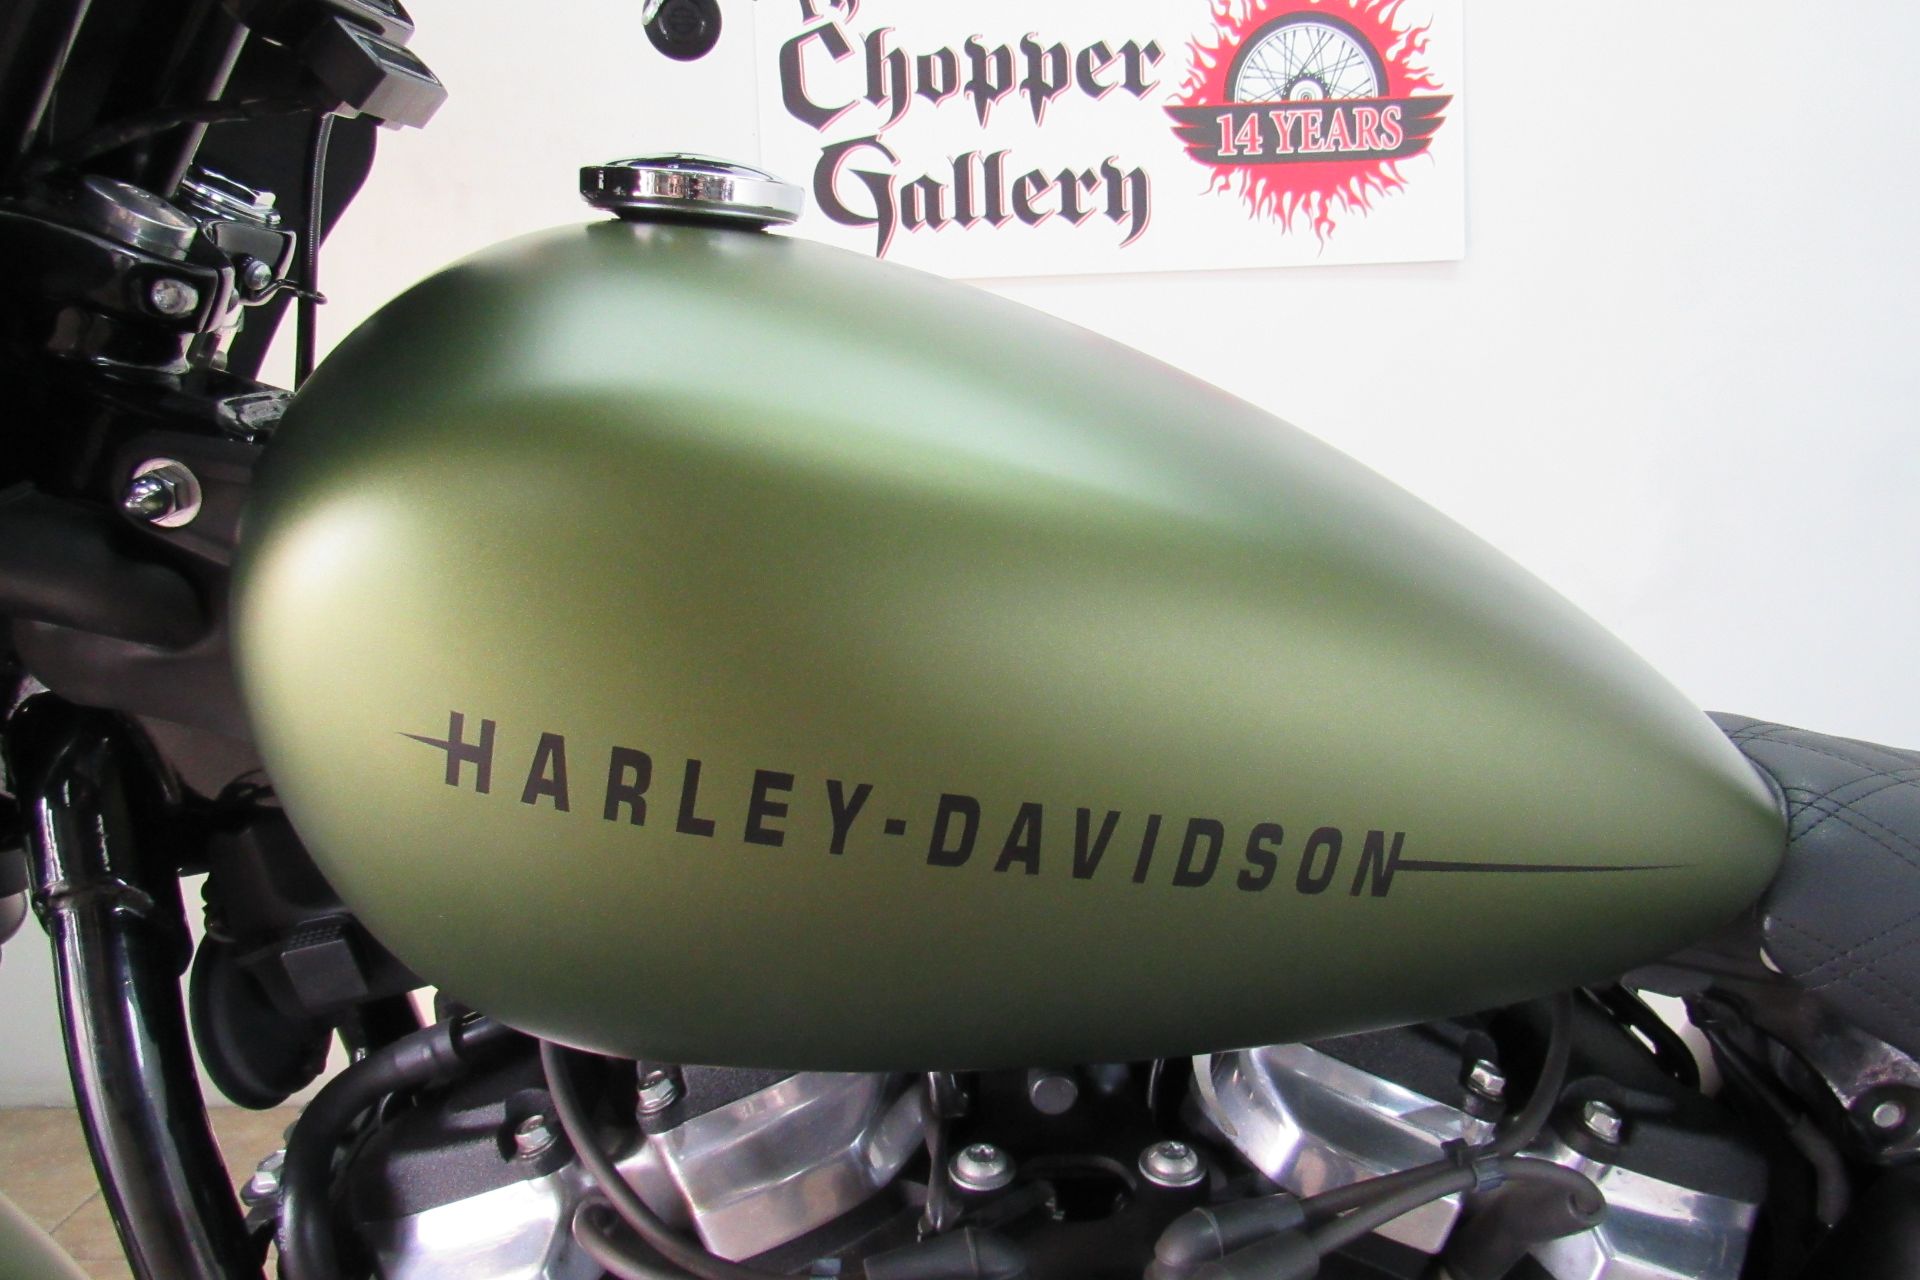 2018 Harley-Davidson Street Bob® 107 in Temecula, California - Photo 8